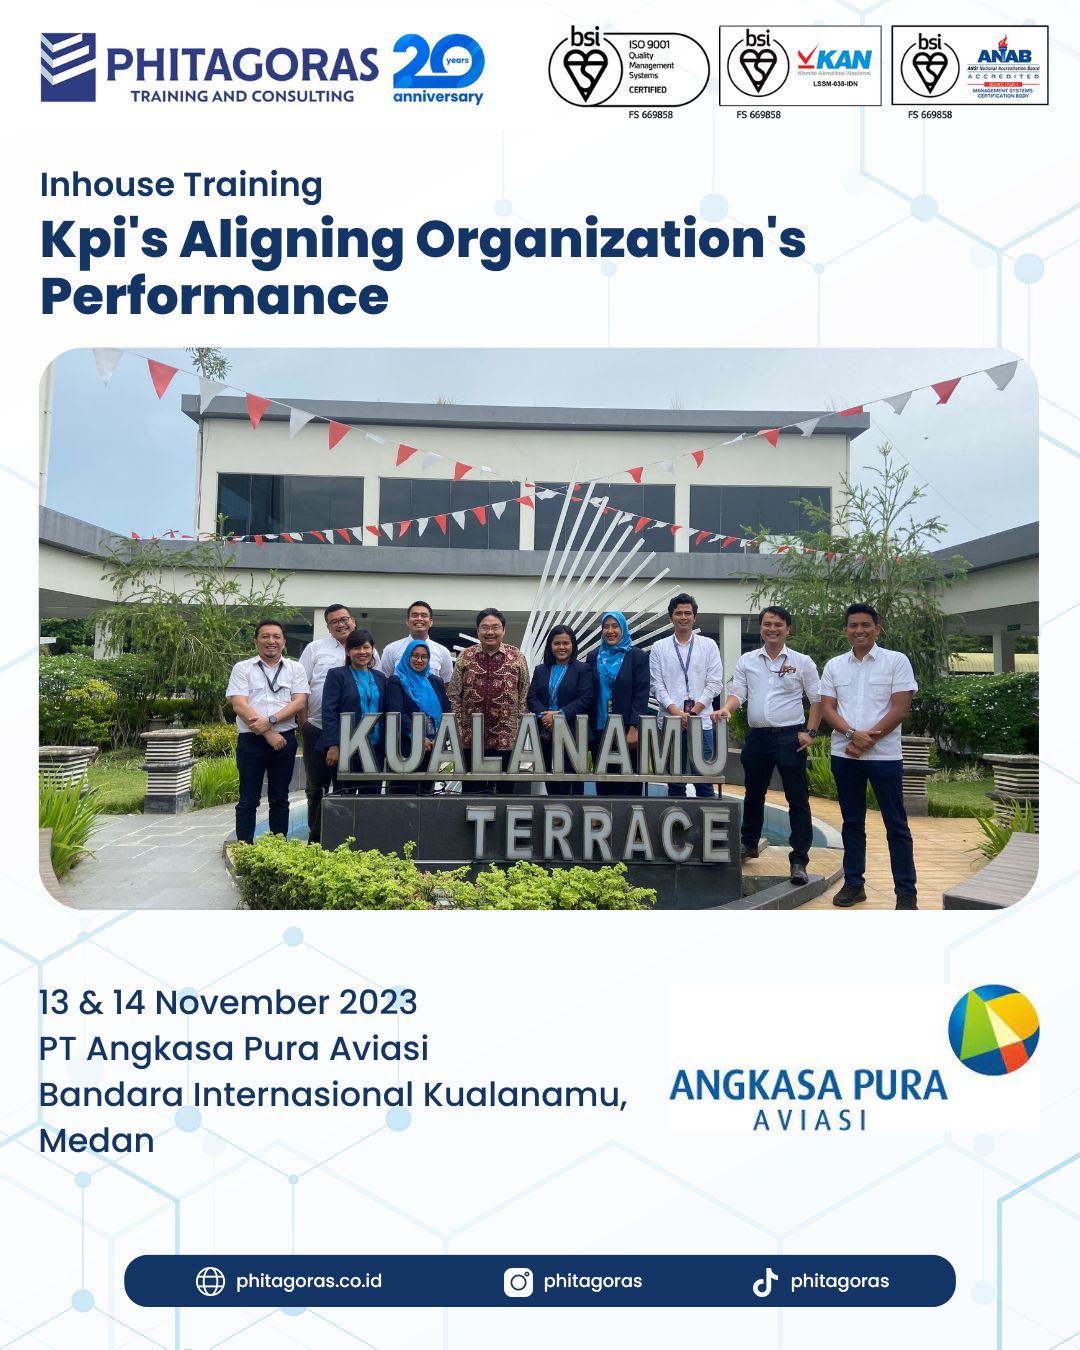 Inhouse Training KPI's Aligning Organization's Performance - PT Angkasa Pura Aviasi Bandara Internasional Kualanamu, Medan